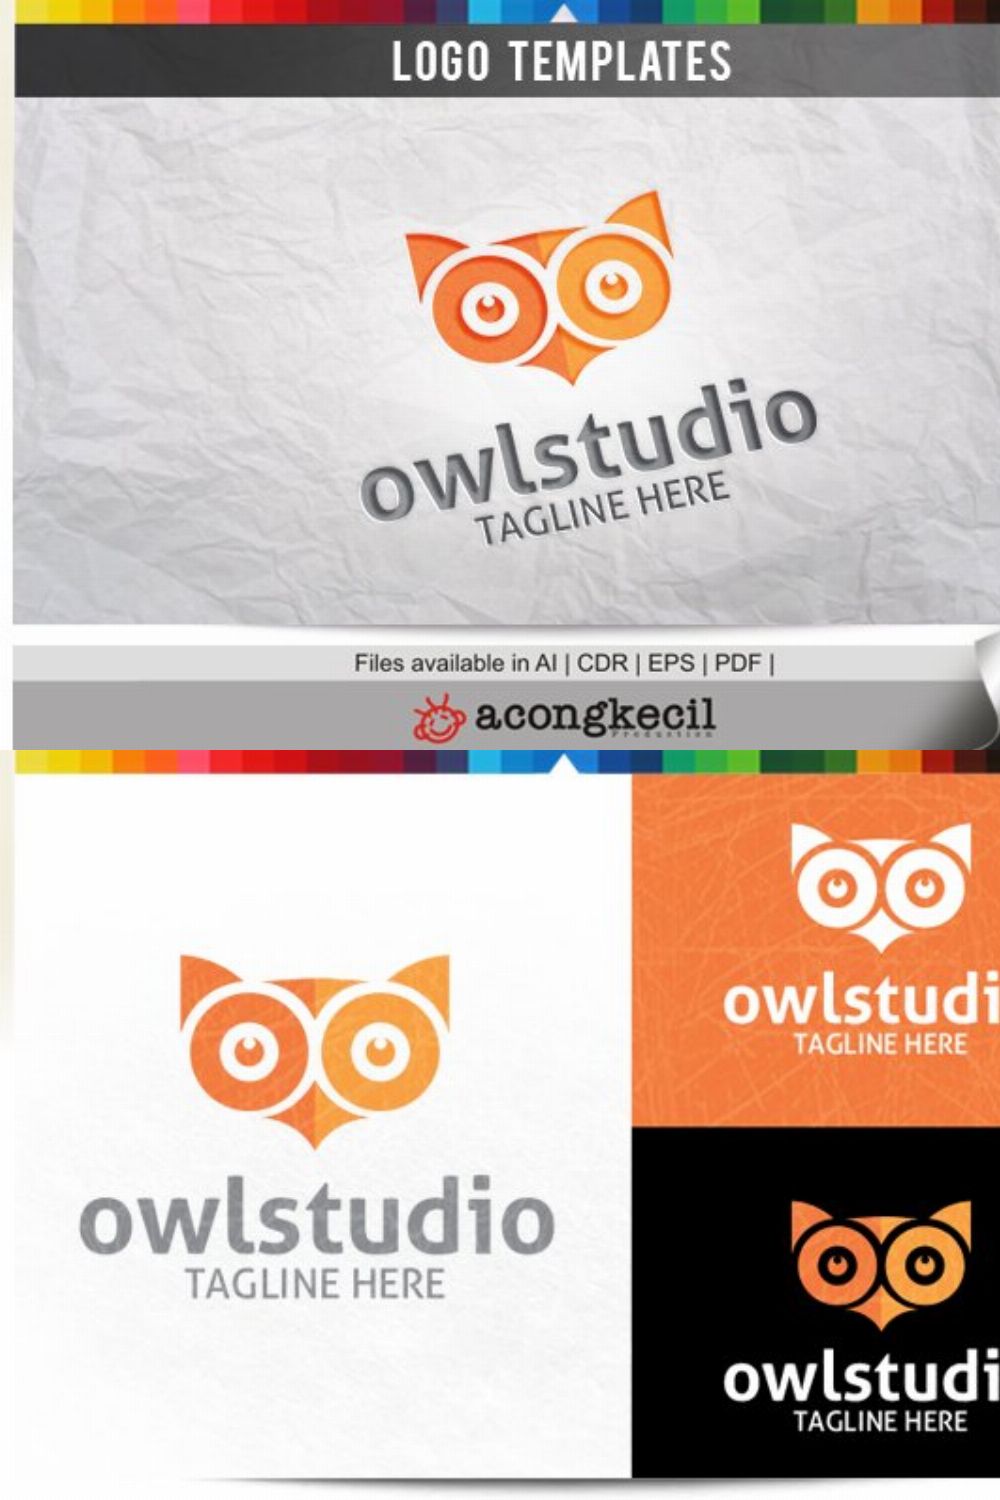 Owl Studio pinterest preview image.